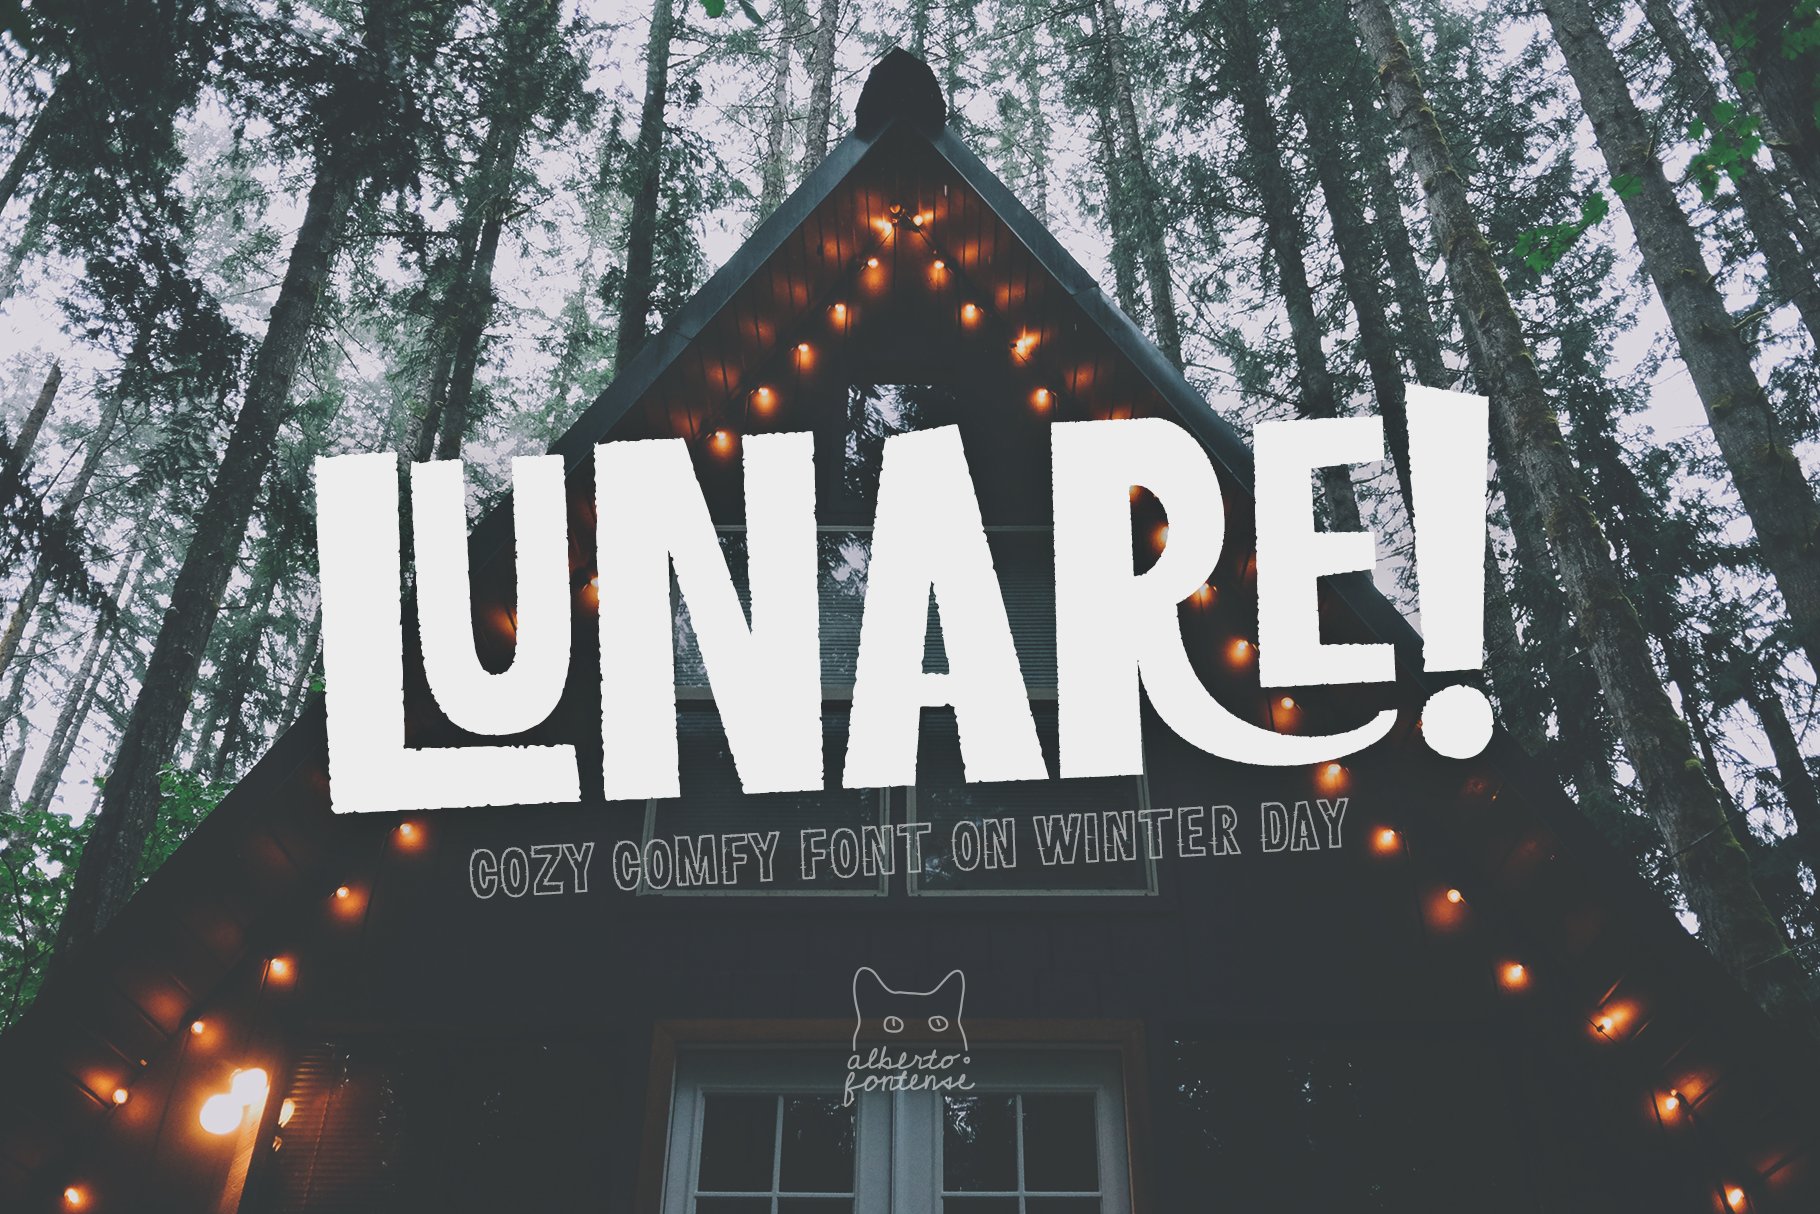 Lunare - Cozy Comfy Font cover image.